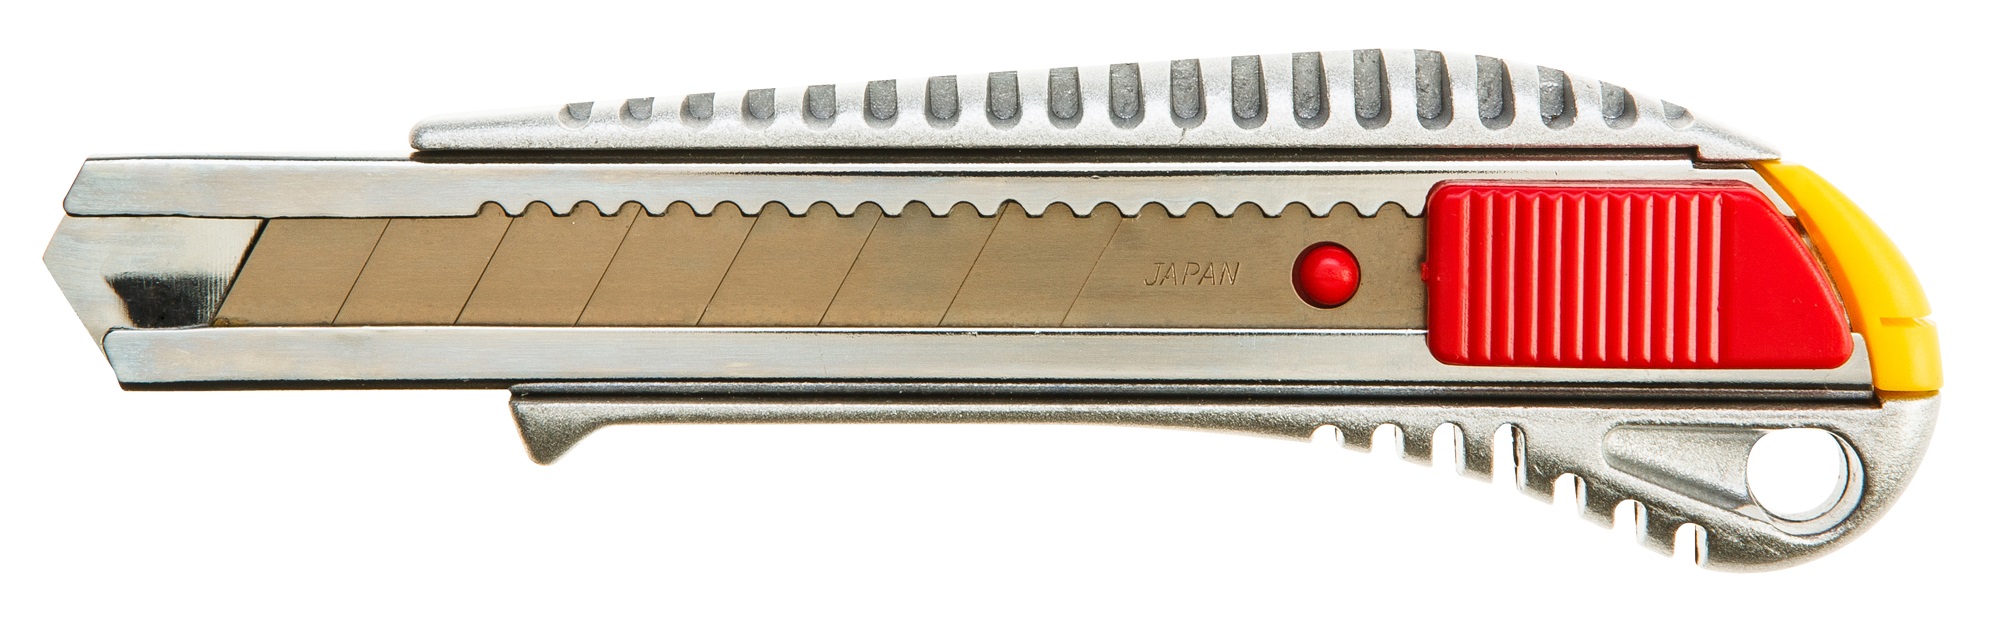 Характеристики нож сегментный Topex 17B128